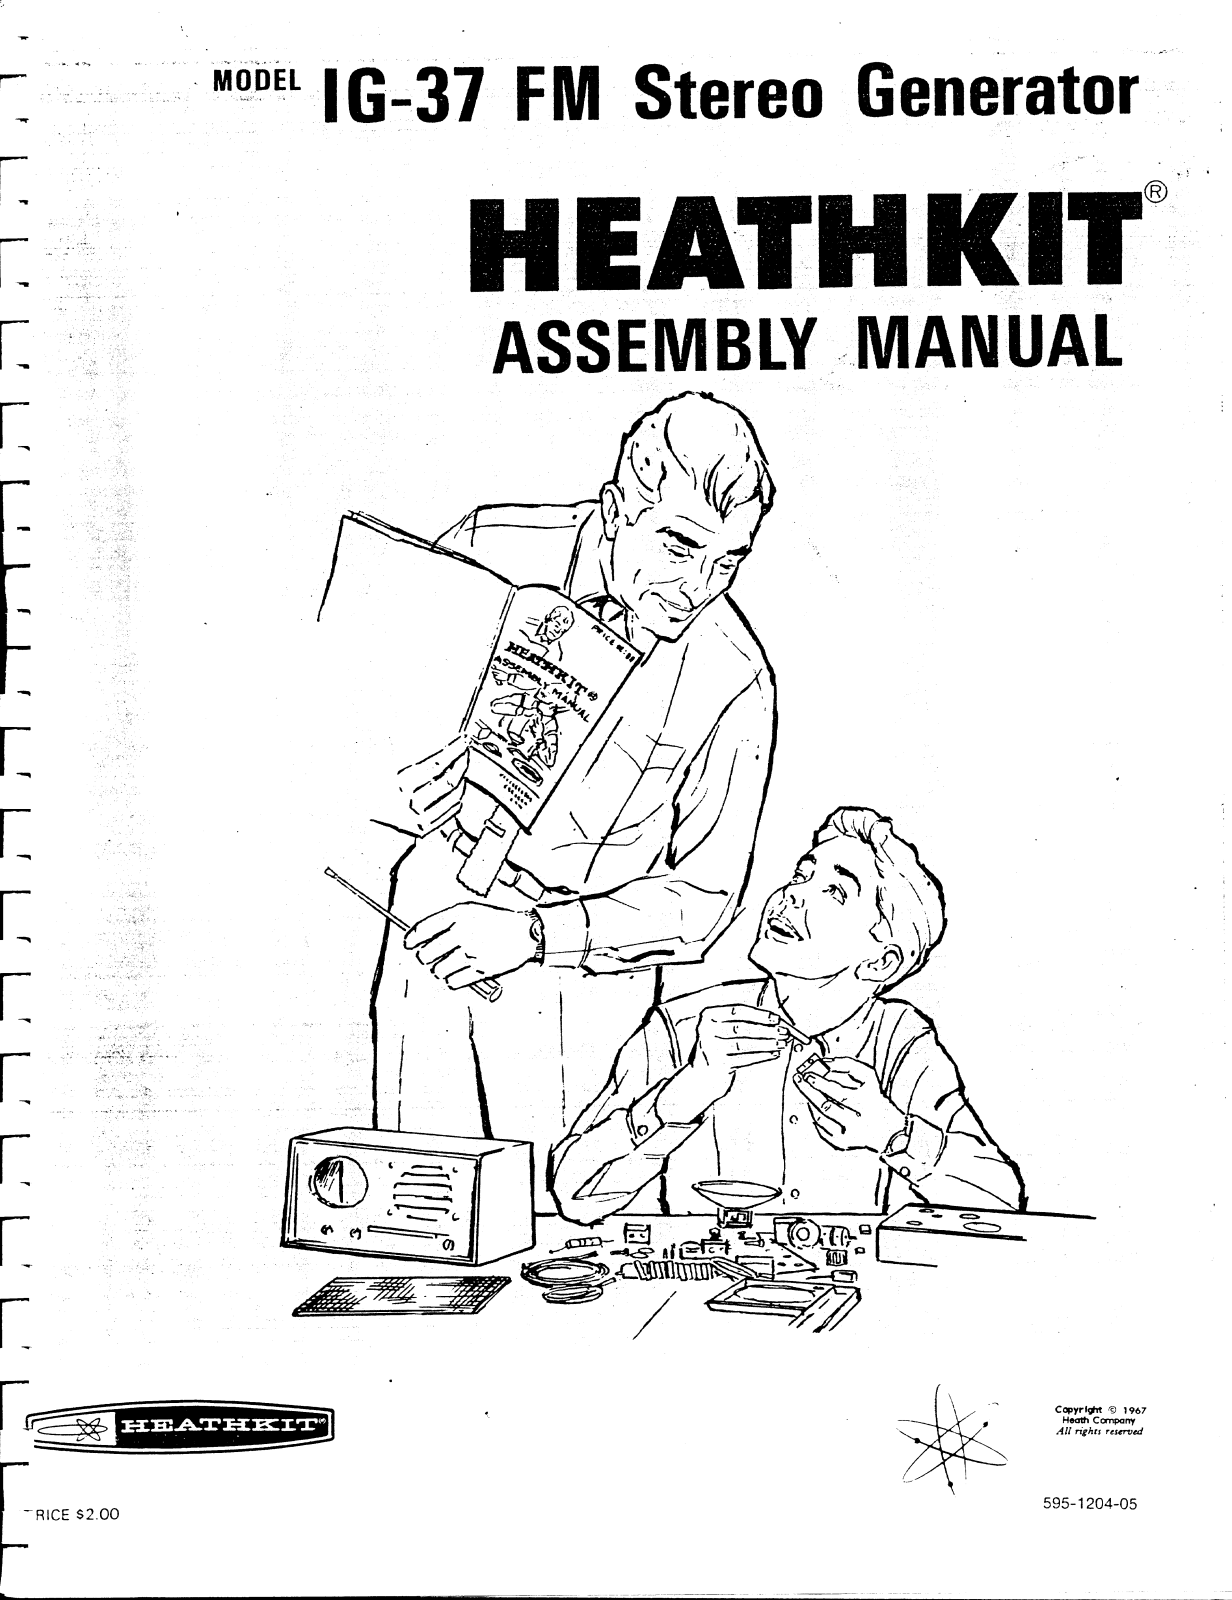 Heathkit IG-37 User Manual